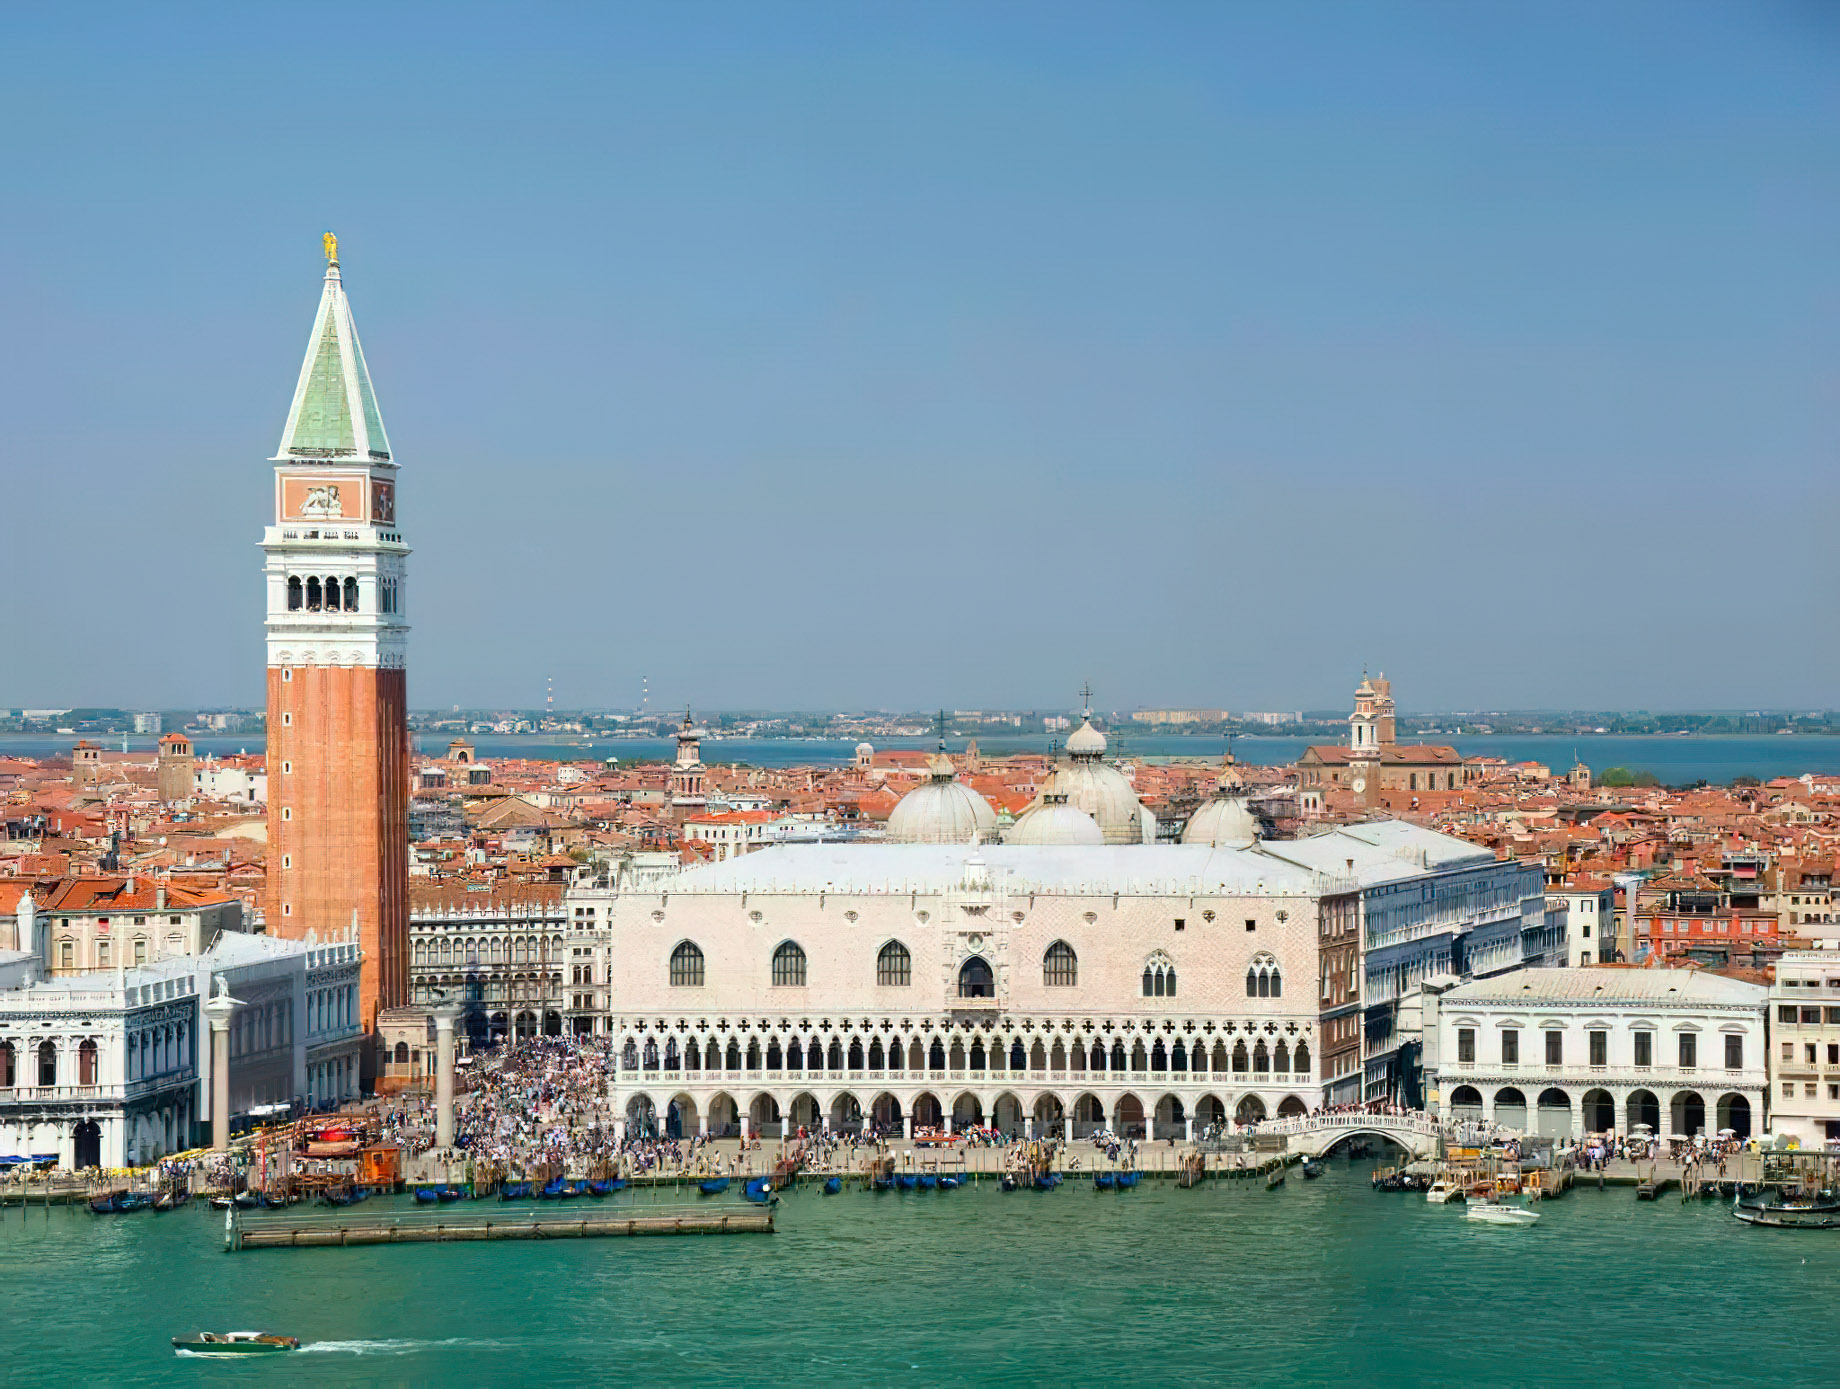 Baglioni Hotel Luna, Venezia – Venice, Italy – Canal Aerial View